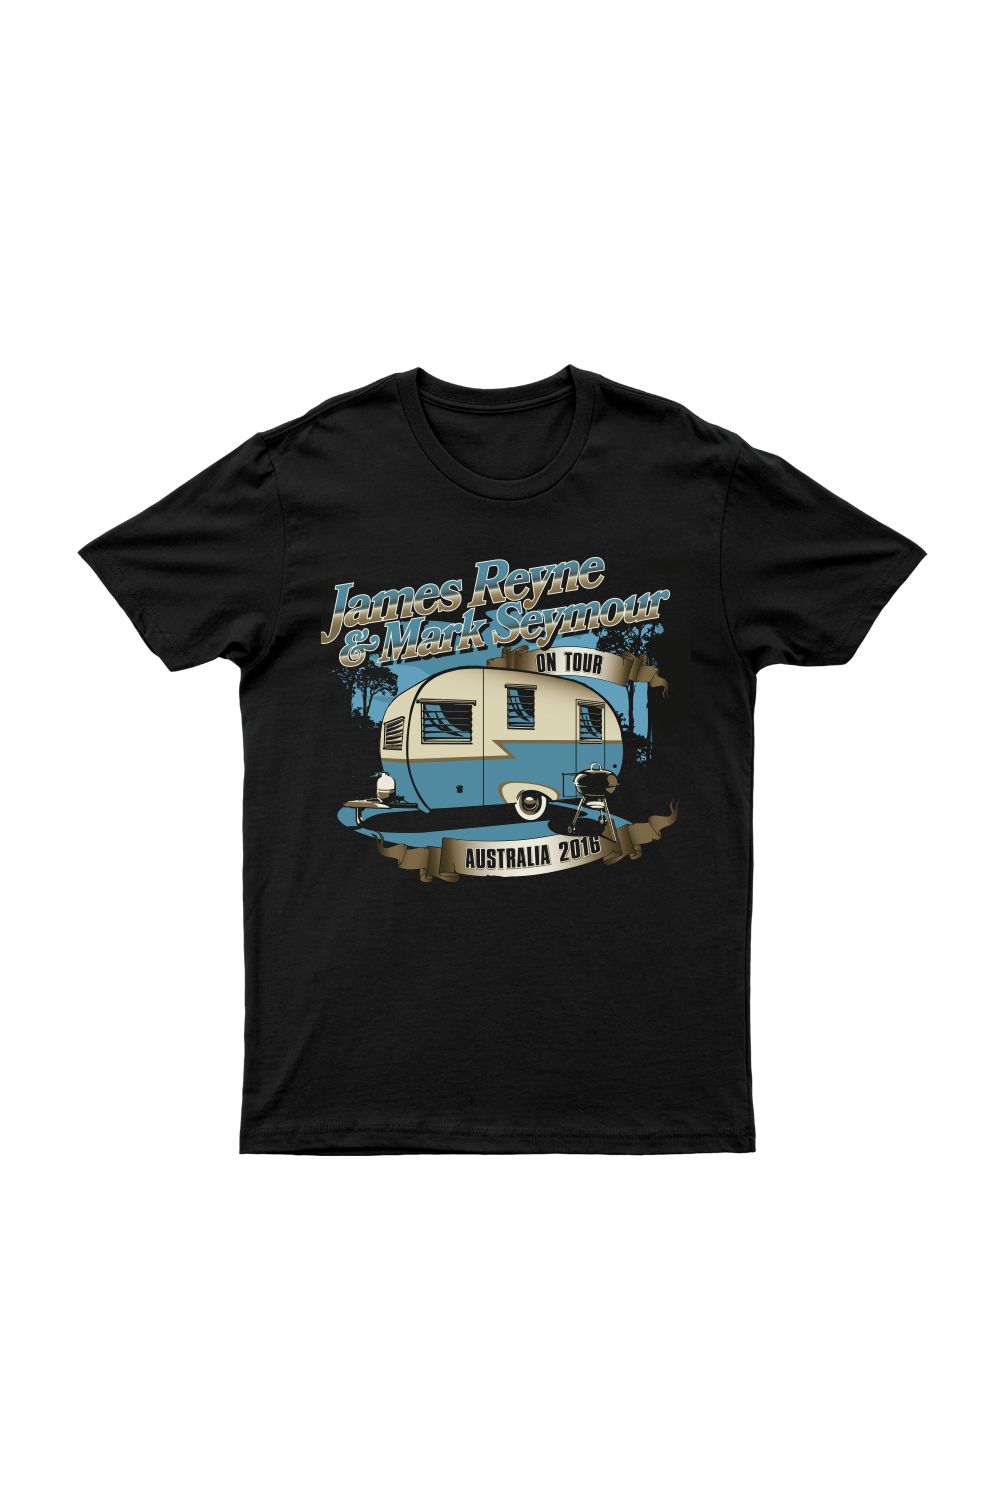 James Reyne — James Reyne Official Merchandise — Band T-Shirts